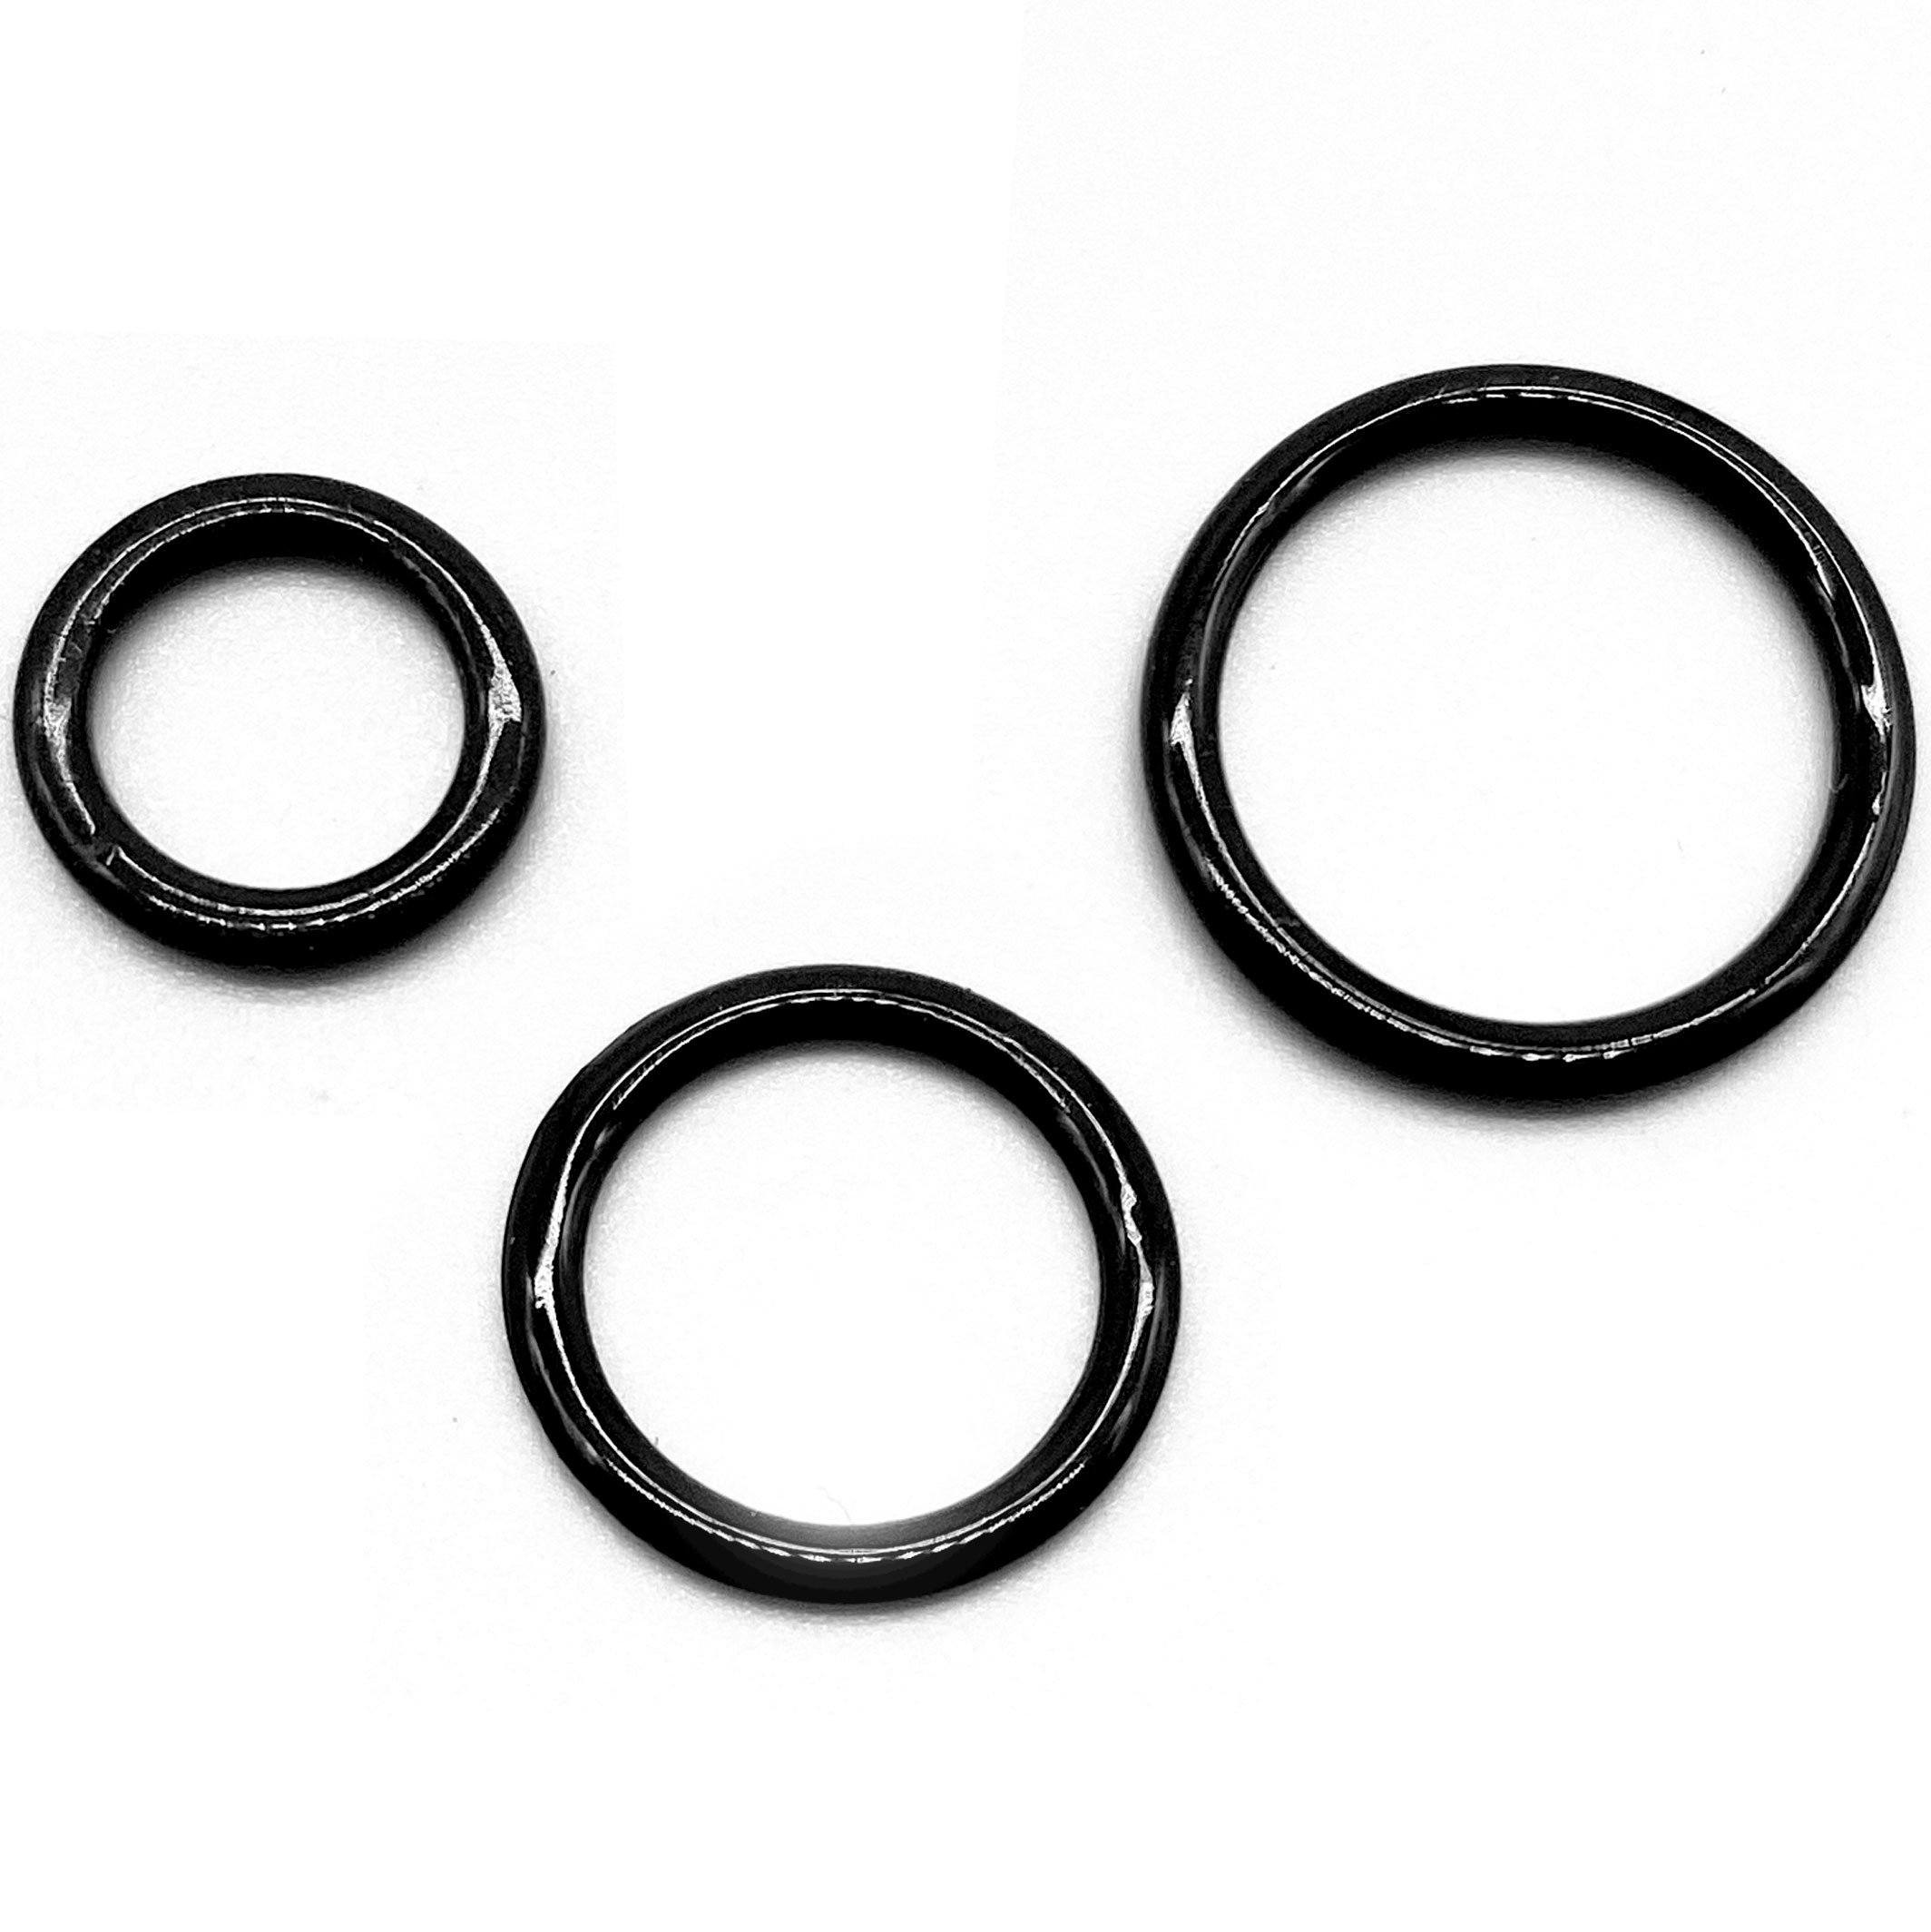 CLEARANCE- 5 Pair of Rings OR Sliders Bra Strap Sliders in Black Enamel for Bra making or Swimwear - 1/4"/6mm, 3/8"/10mm, 1/2"/12mm - Stitch Love Studio